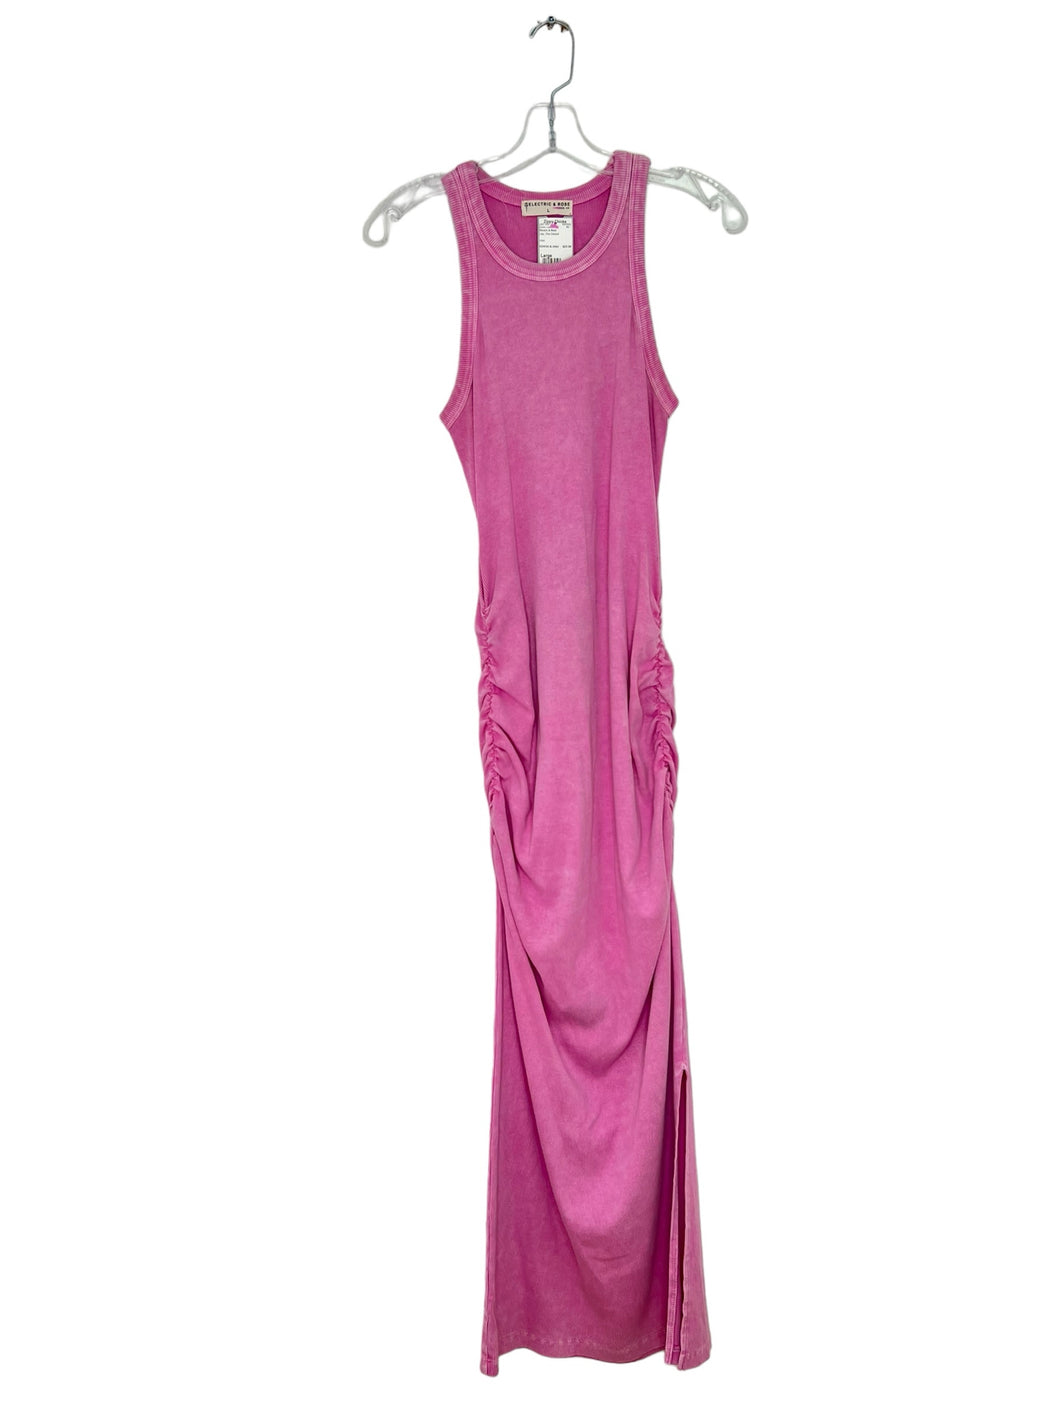 Electric & Rose Size Large Lilac Dress- Ladies